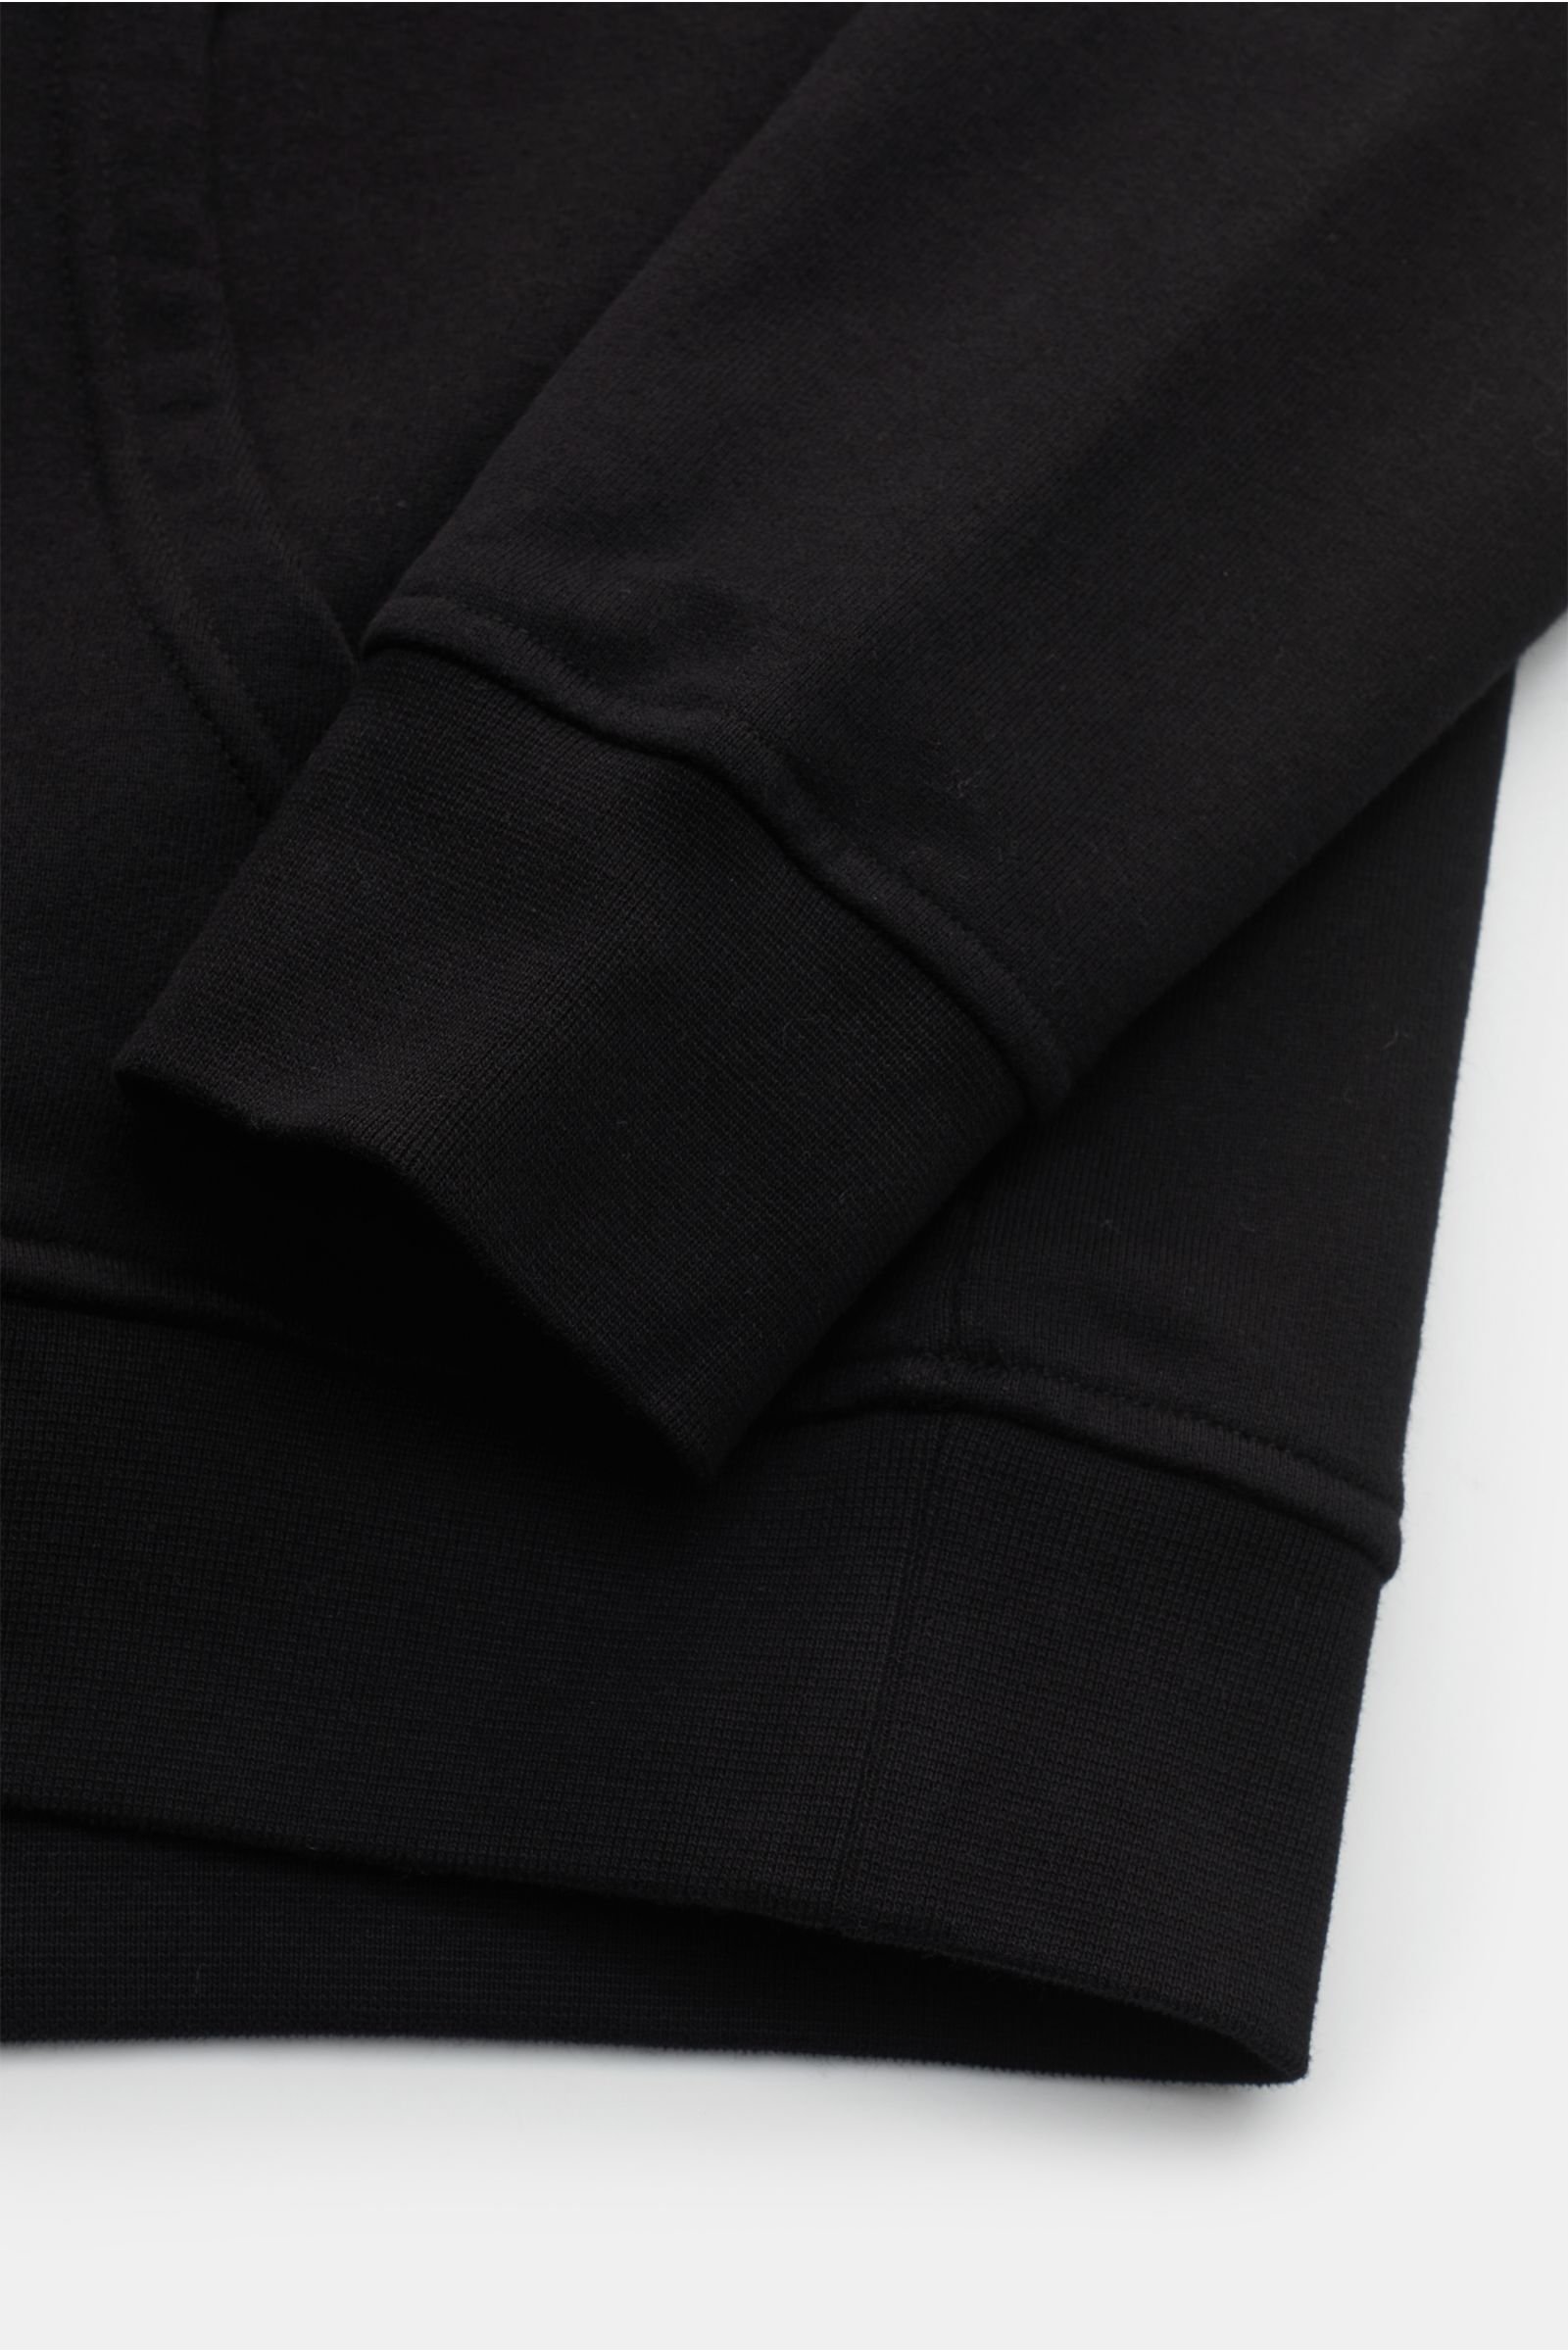 BELSTAFF hooded jumper black | BRAUN Hamburg